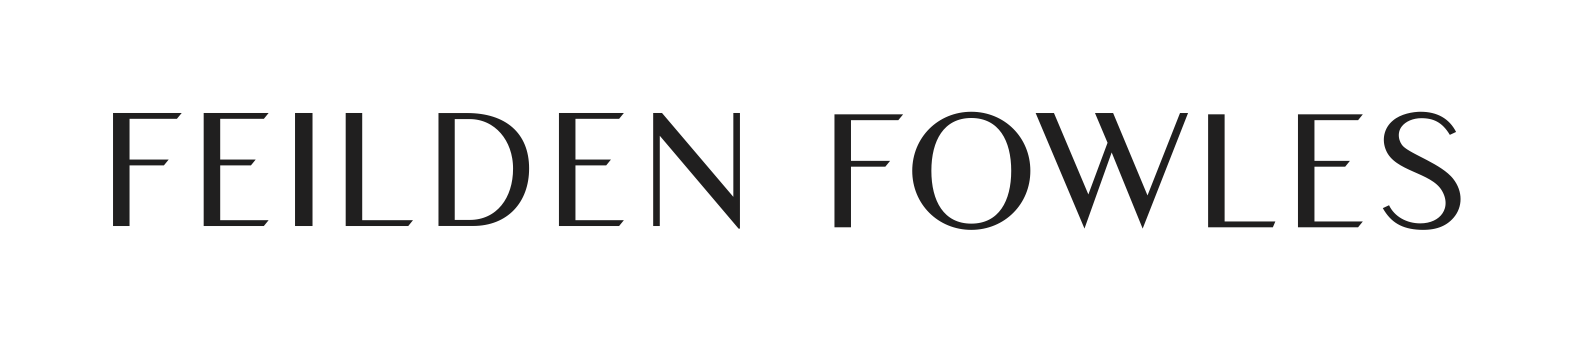 Feilden Fowles_Single line logo_spacing.png